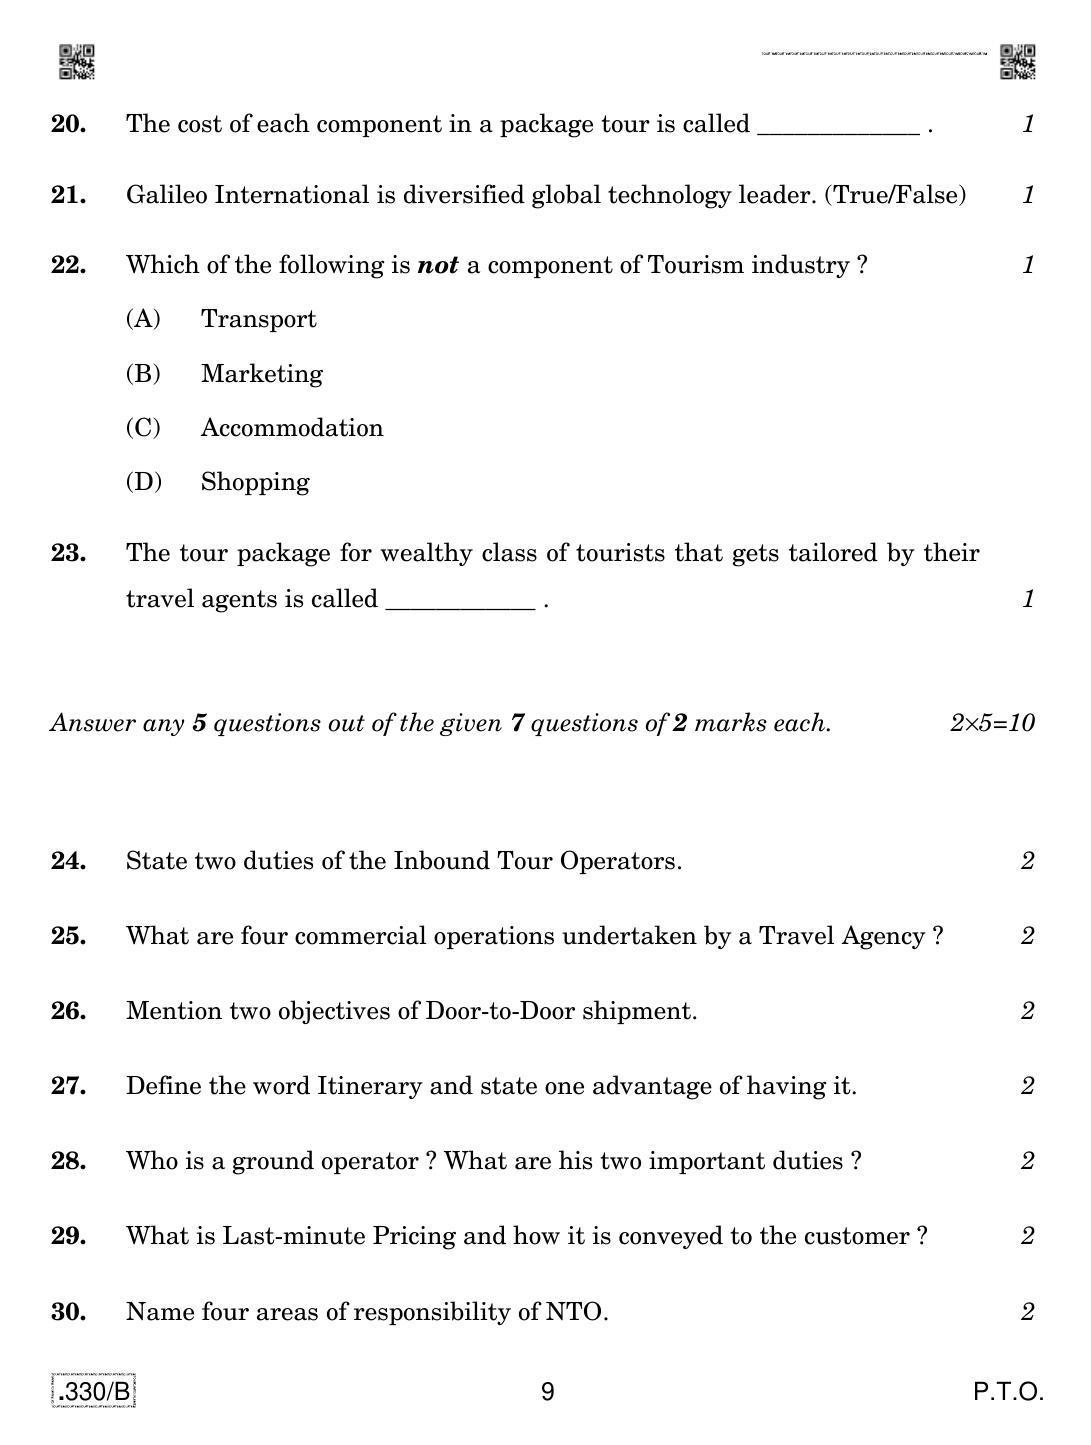 CBSE Class 12 Tourism 2020 Compartment Question Paper - Page 9